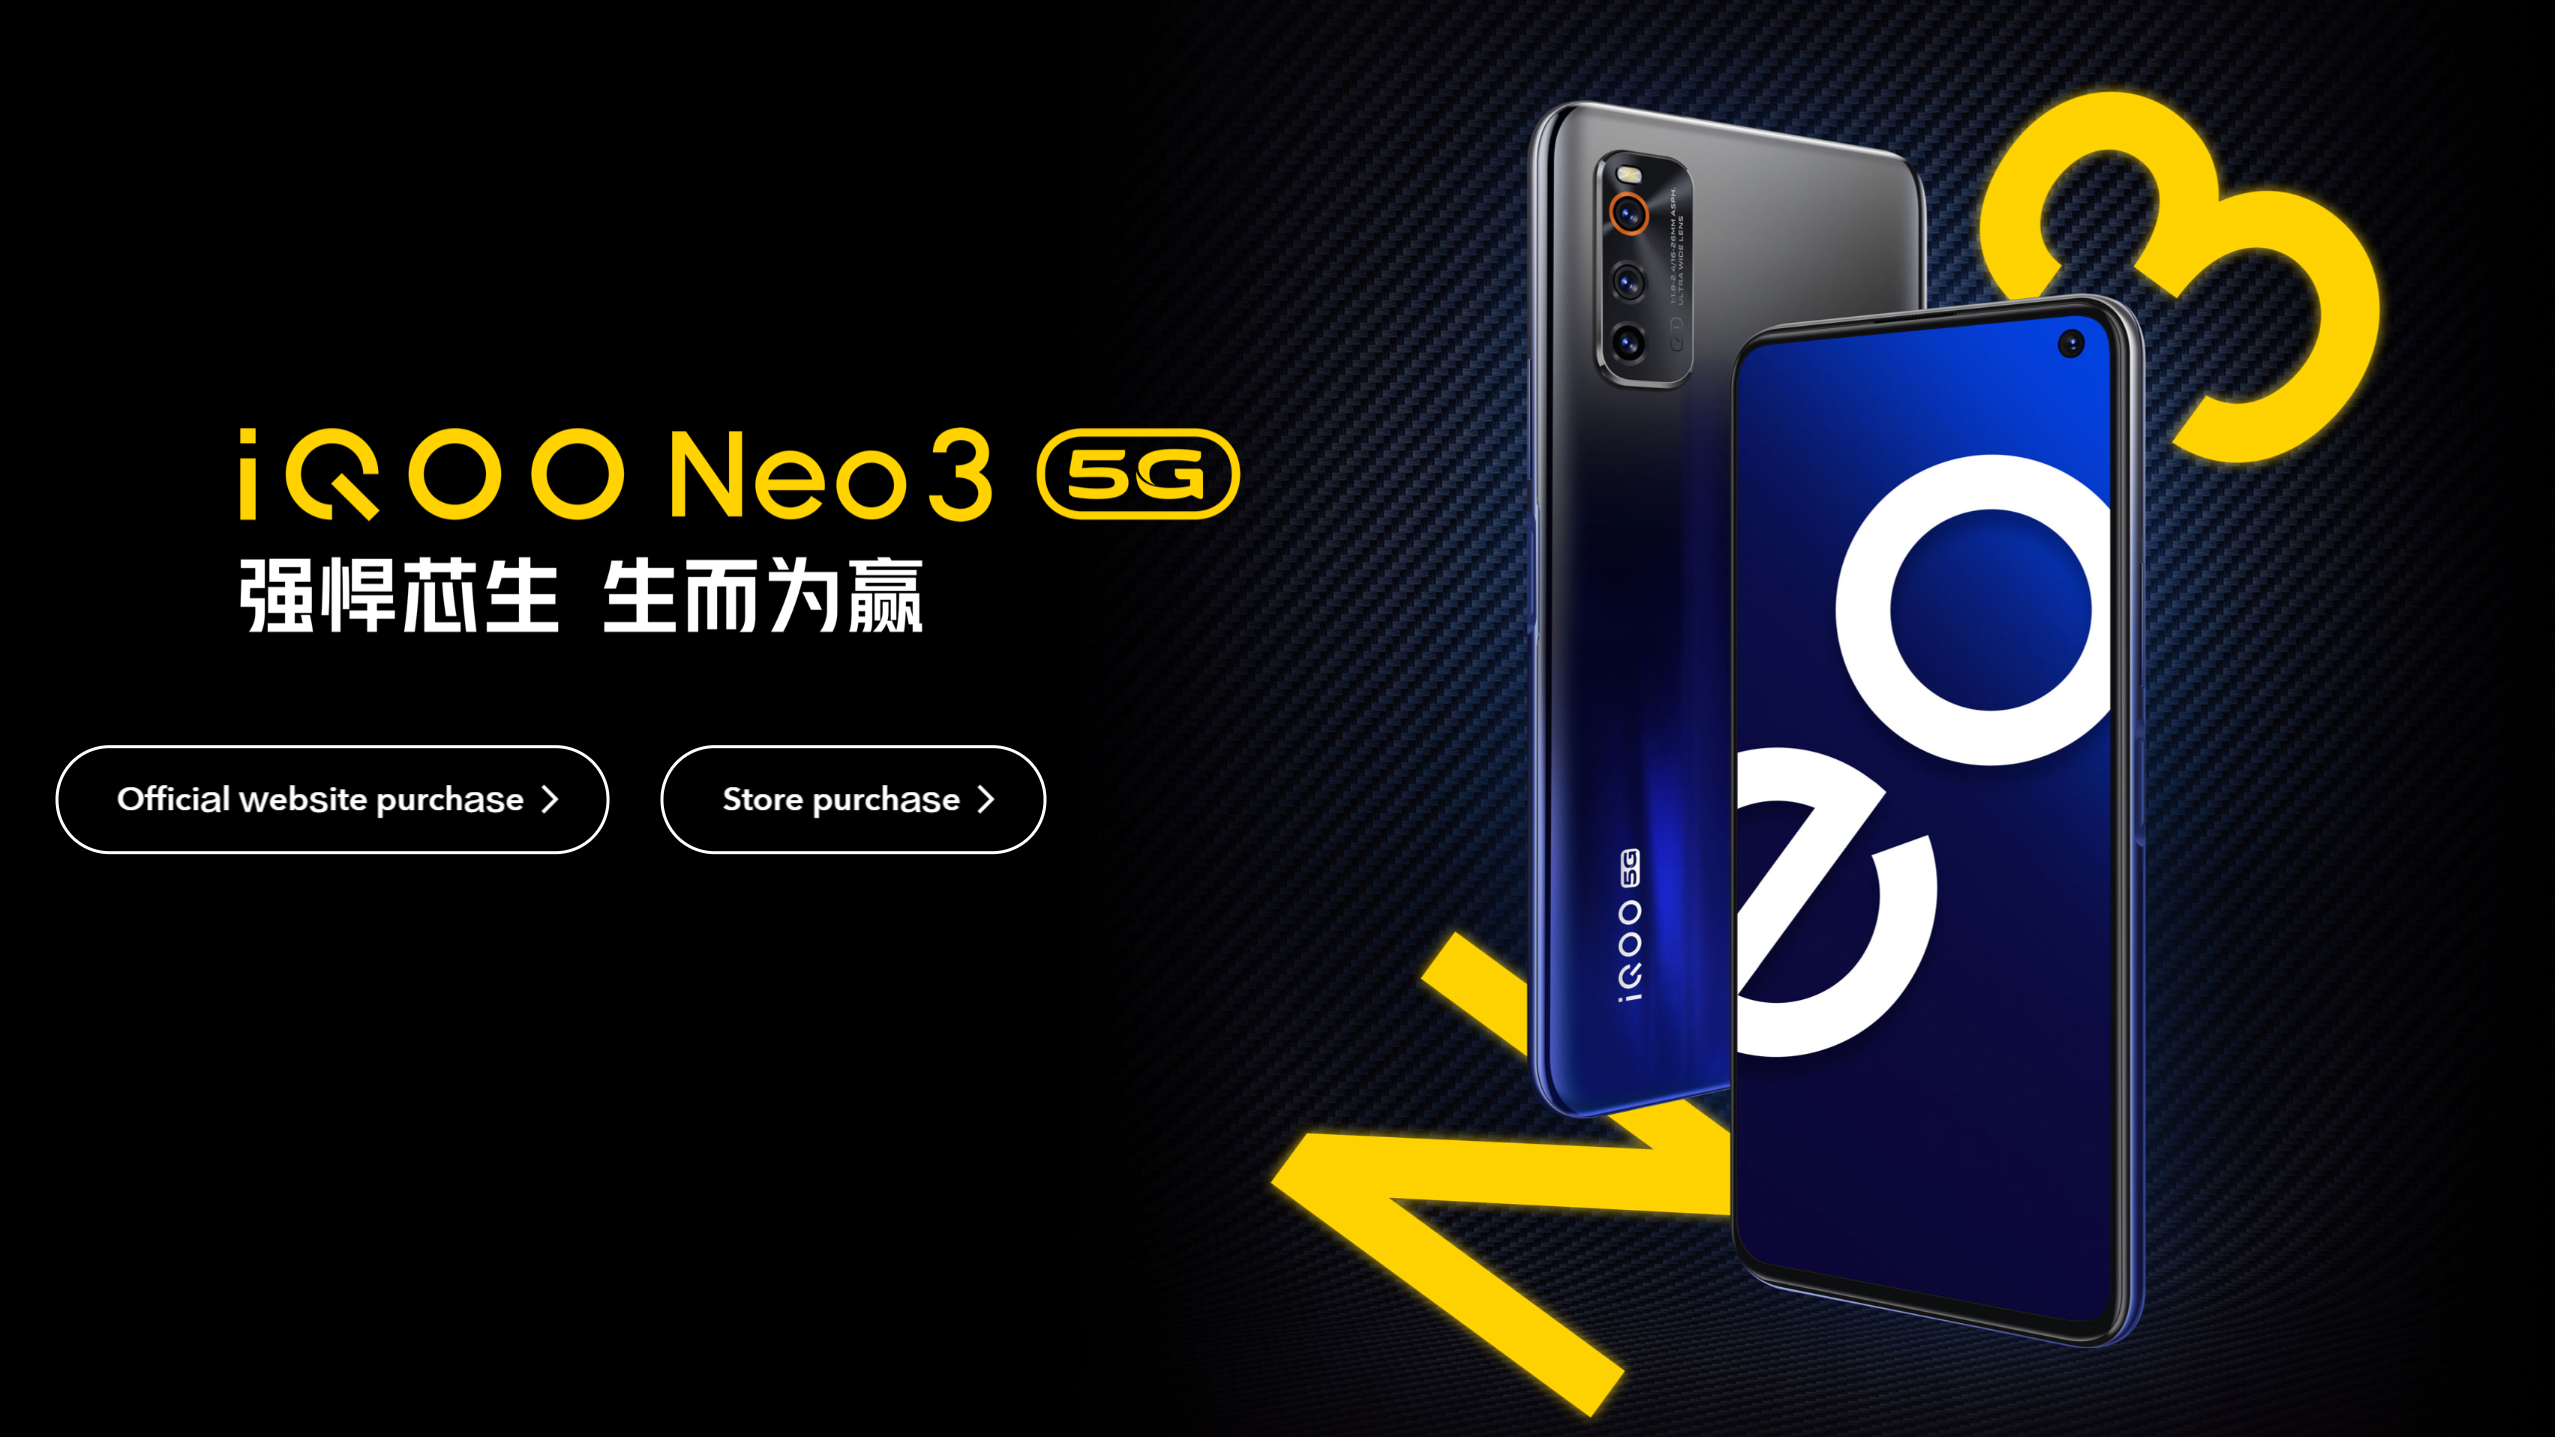 Vivo IQOO Neo 3 - Snapdragon 865 & 144Hz Display für 350€